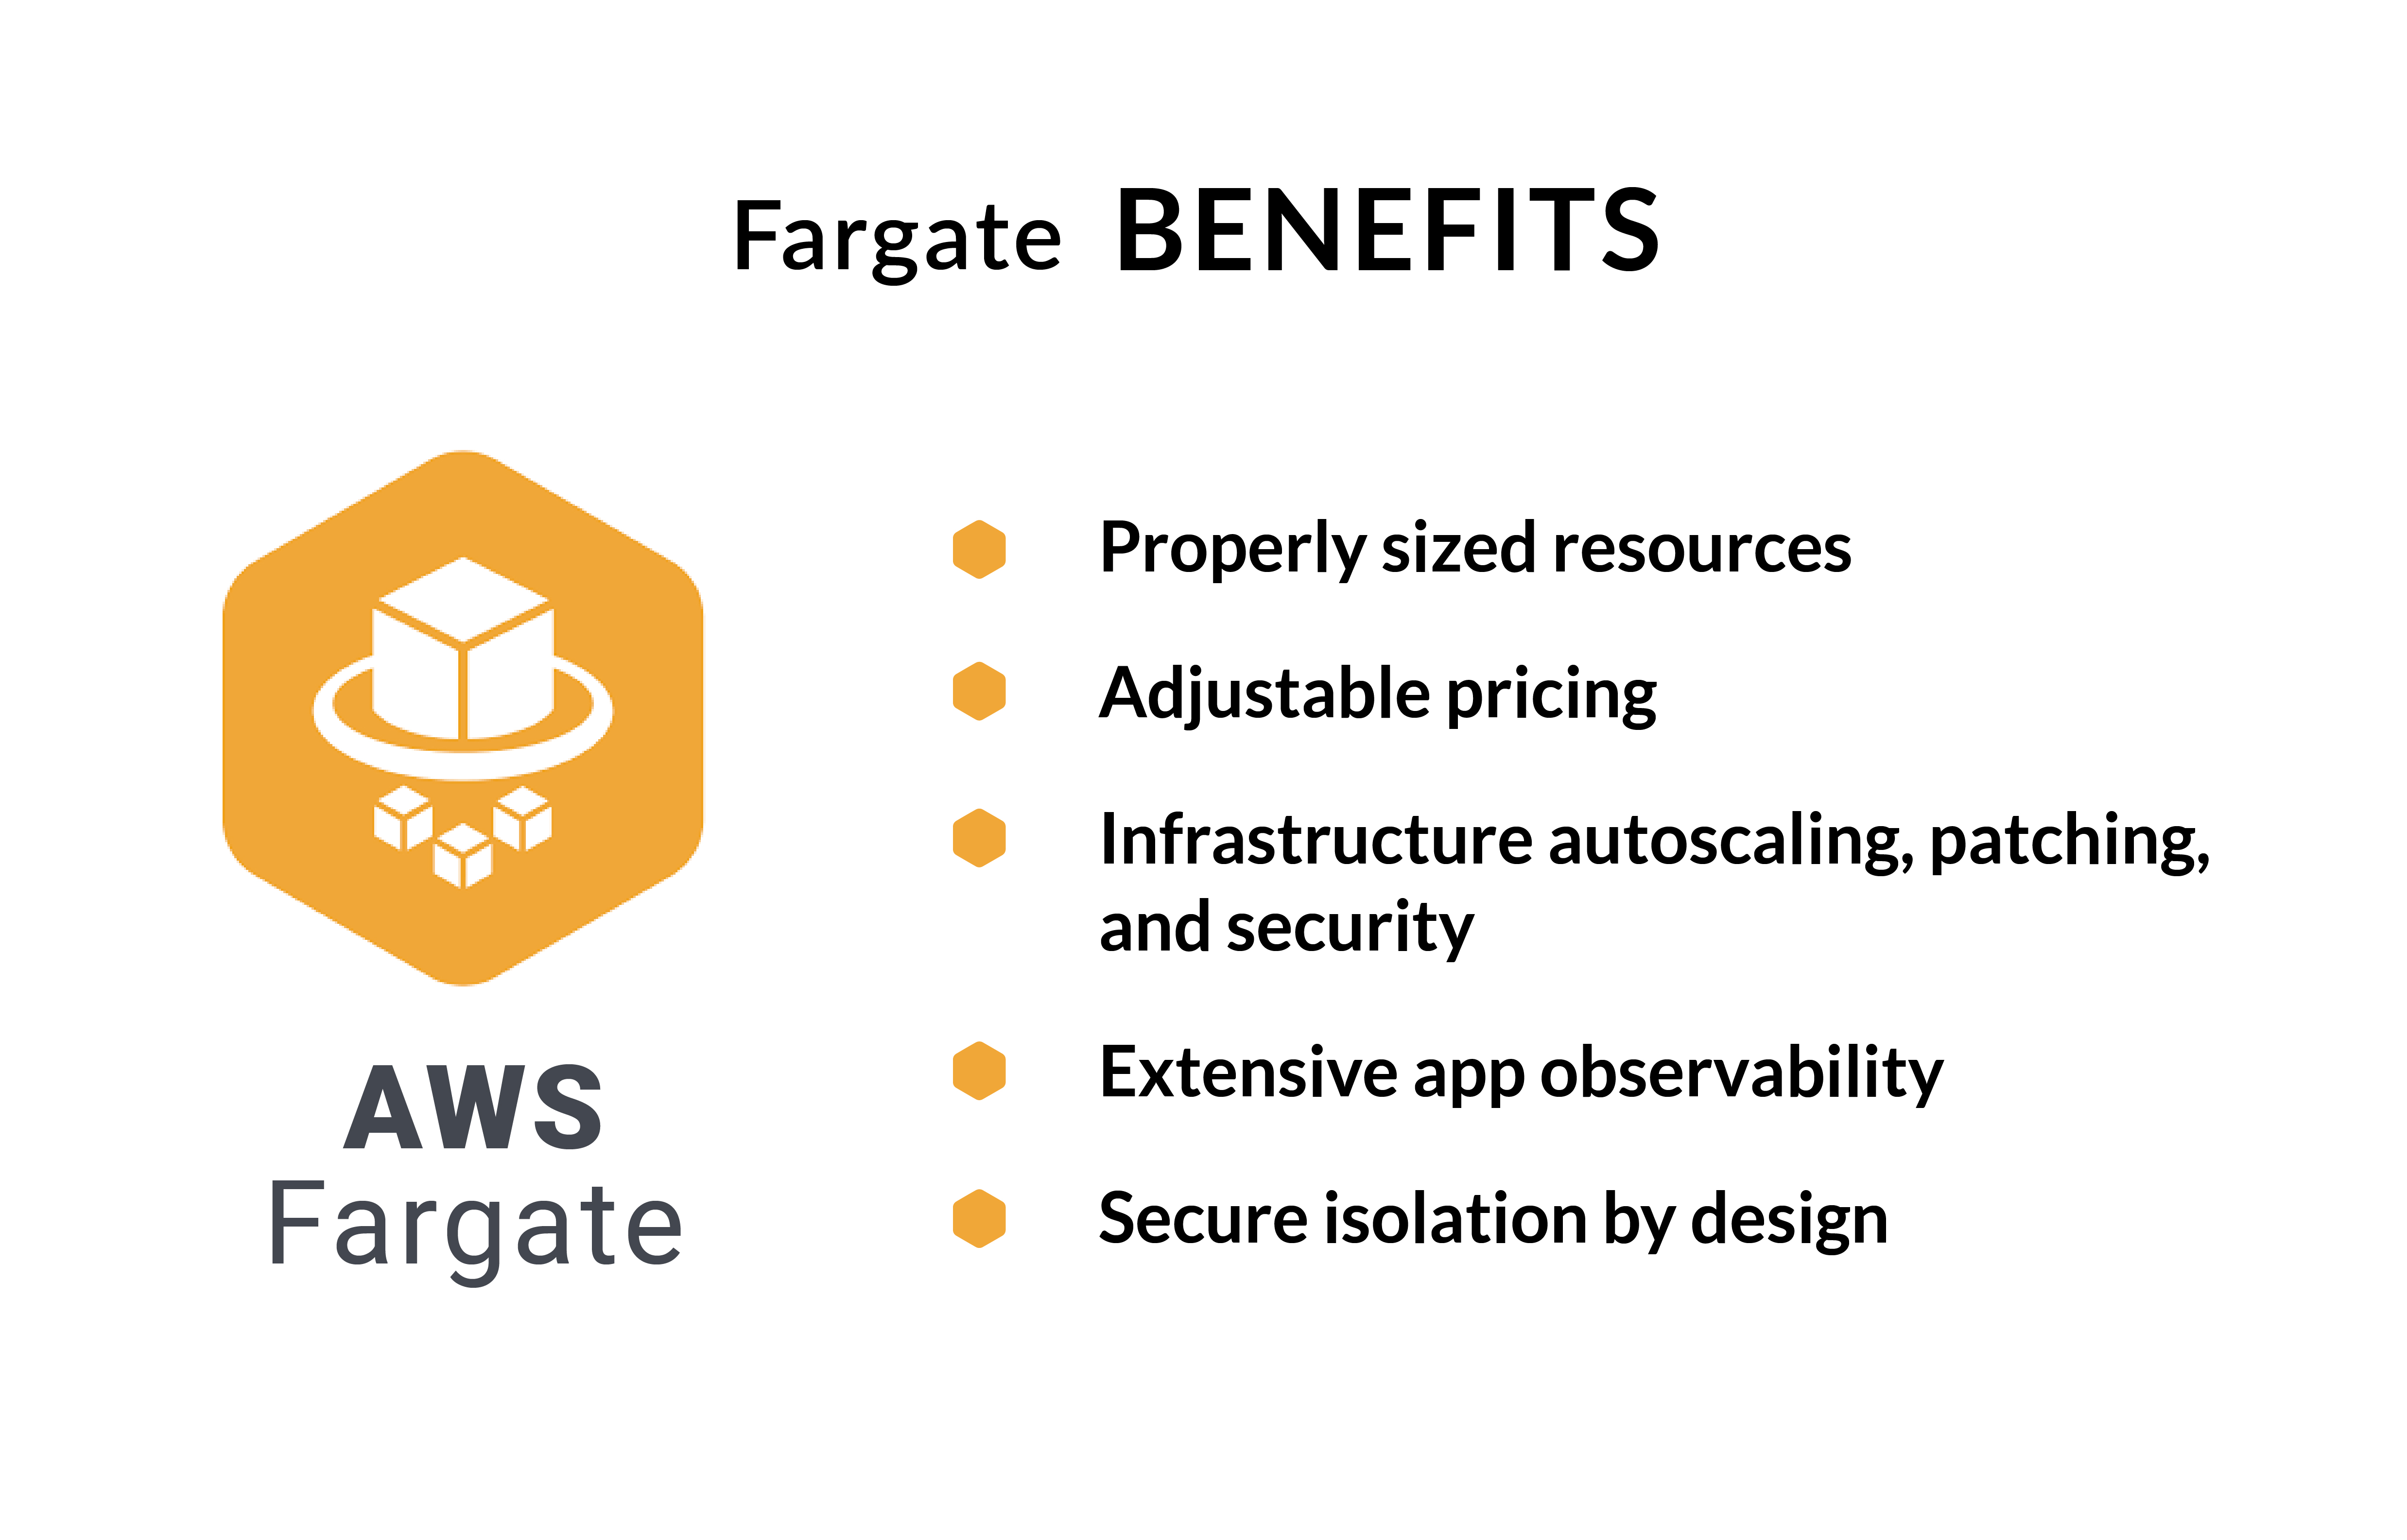 Fargate benefits